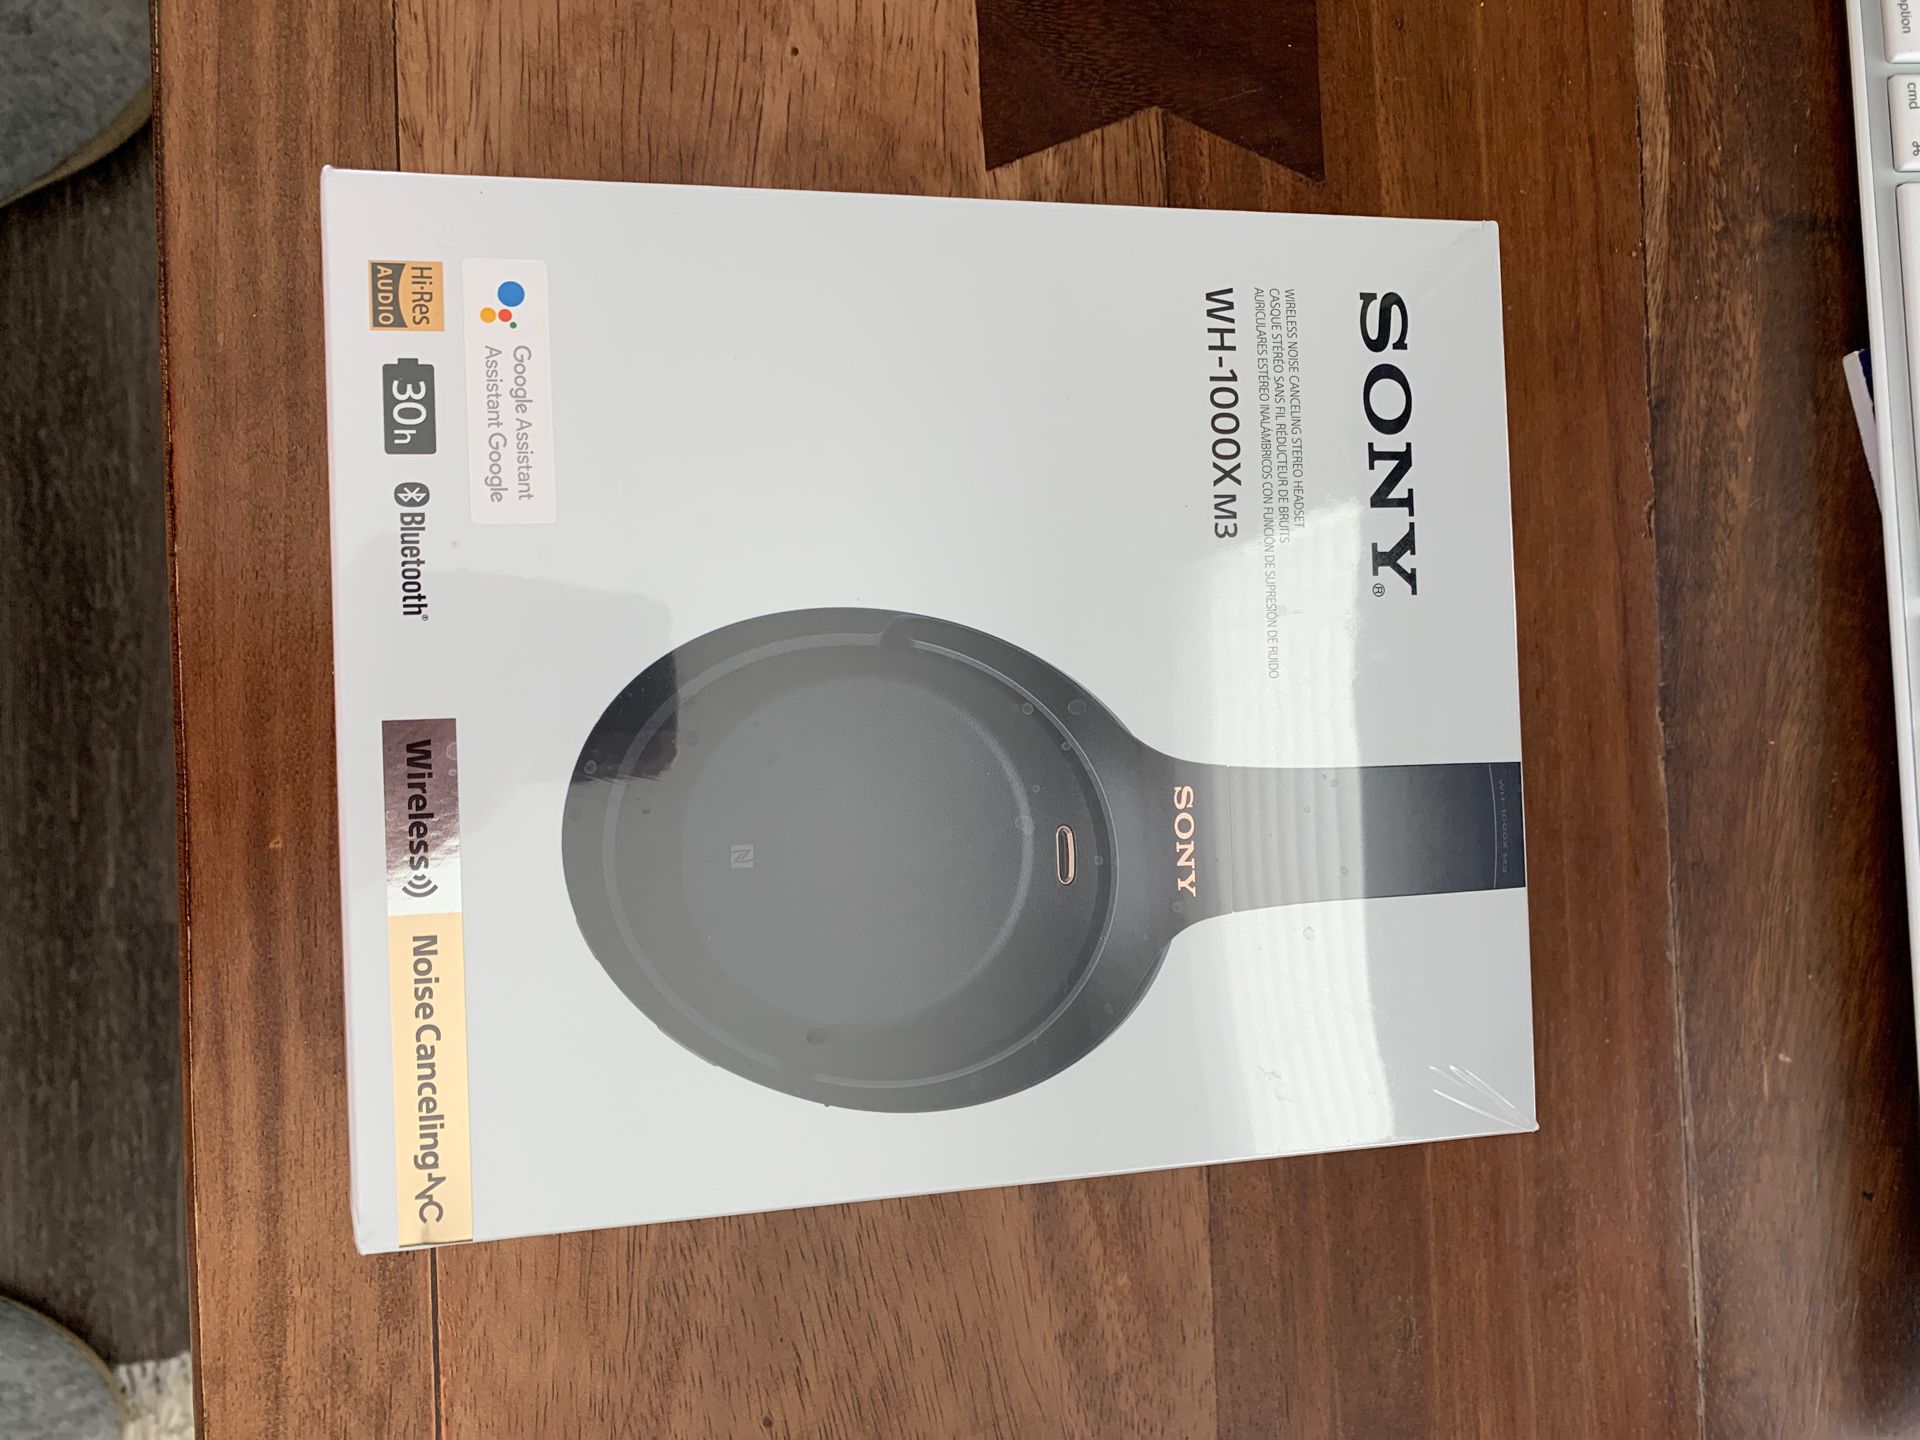 Sony WH-1000XM3 Noise Canceling Headphones